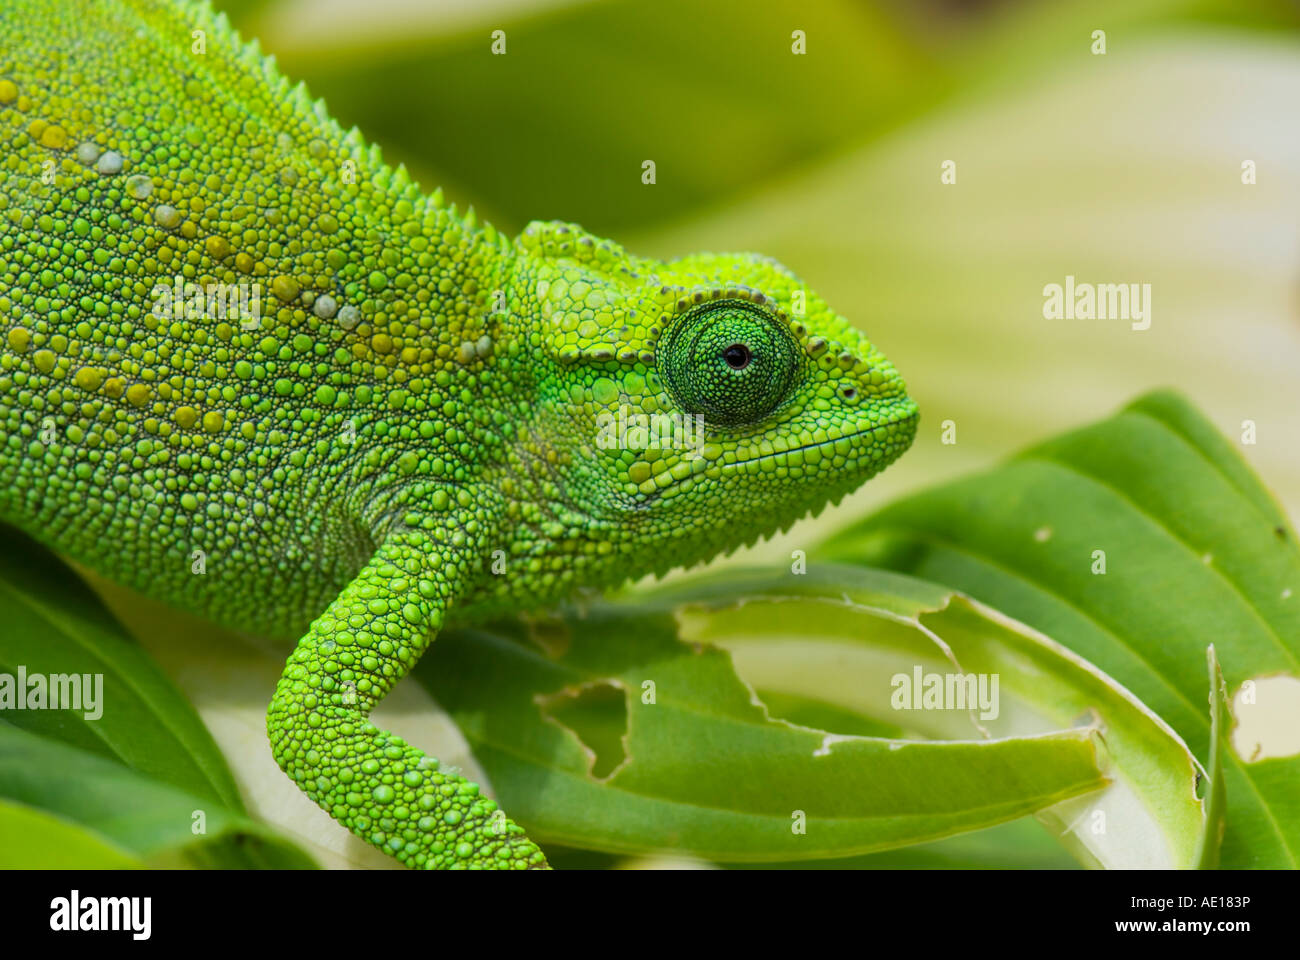 Green chameleon looking sidewards Stock Photo